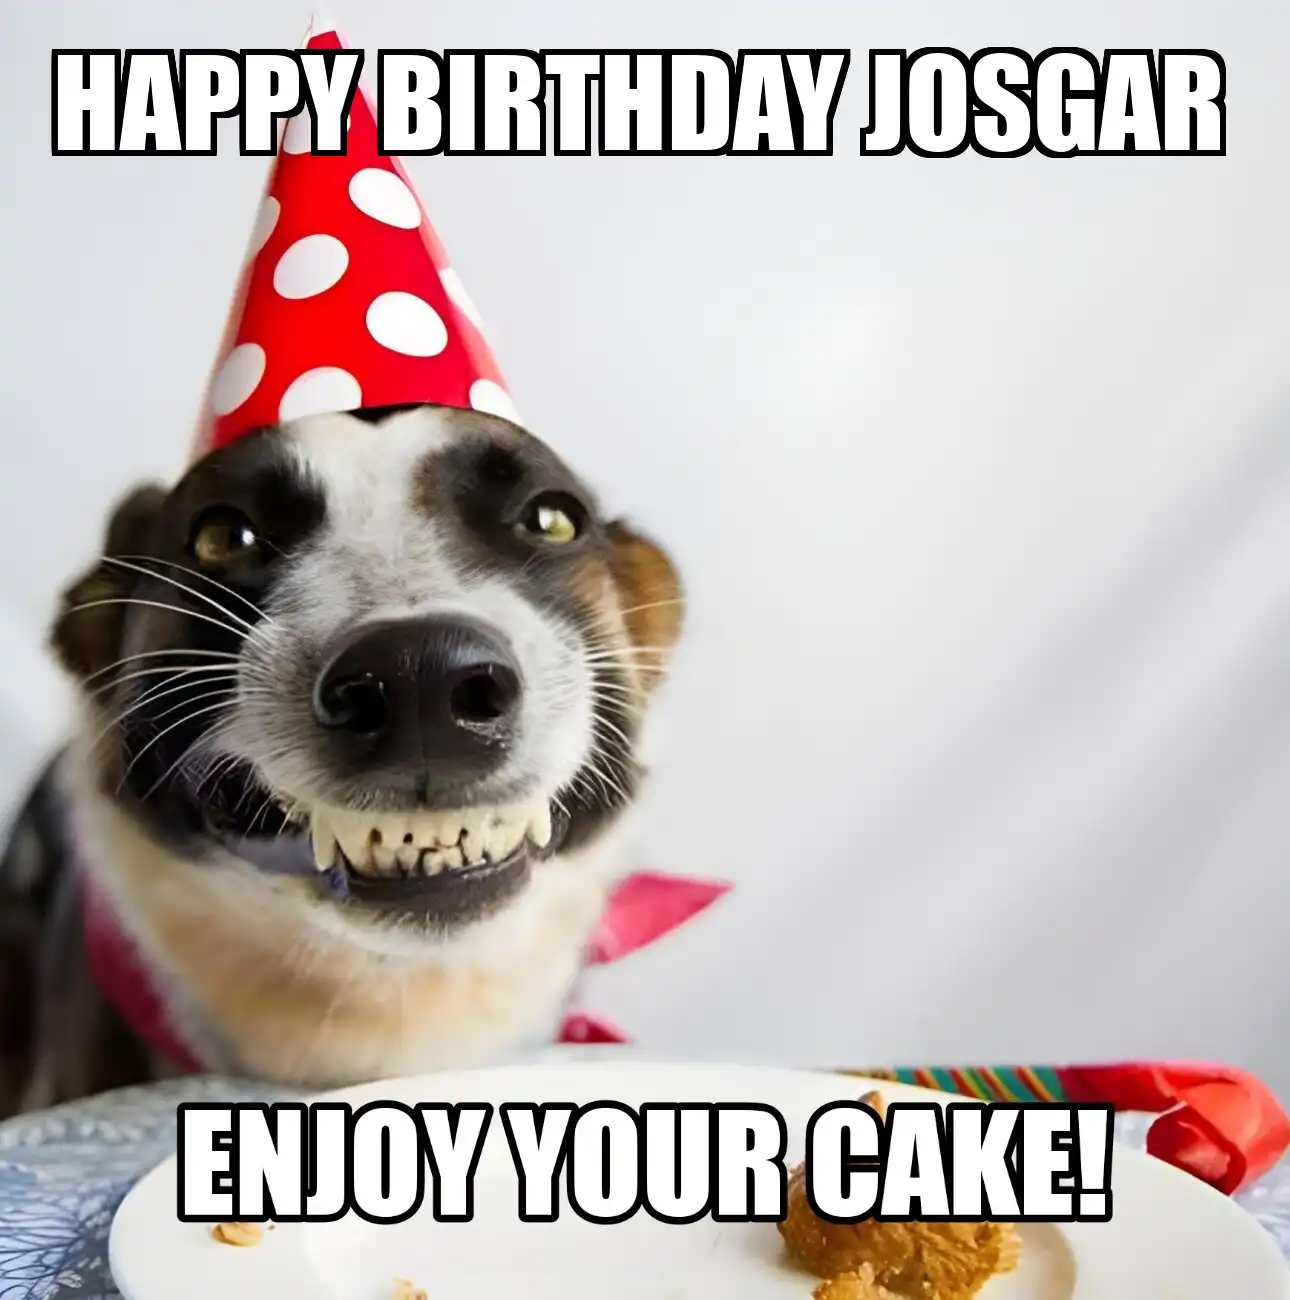 Happy Birthday Josgar Enjoy Your Cake Dog Meme